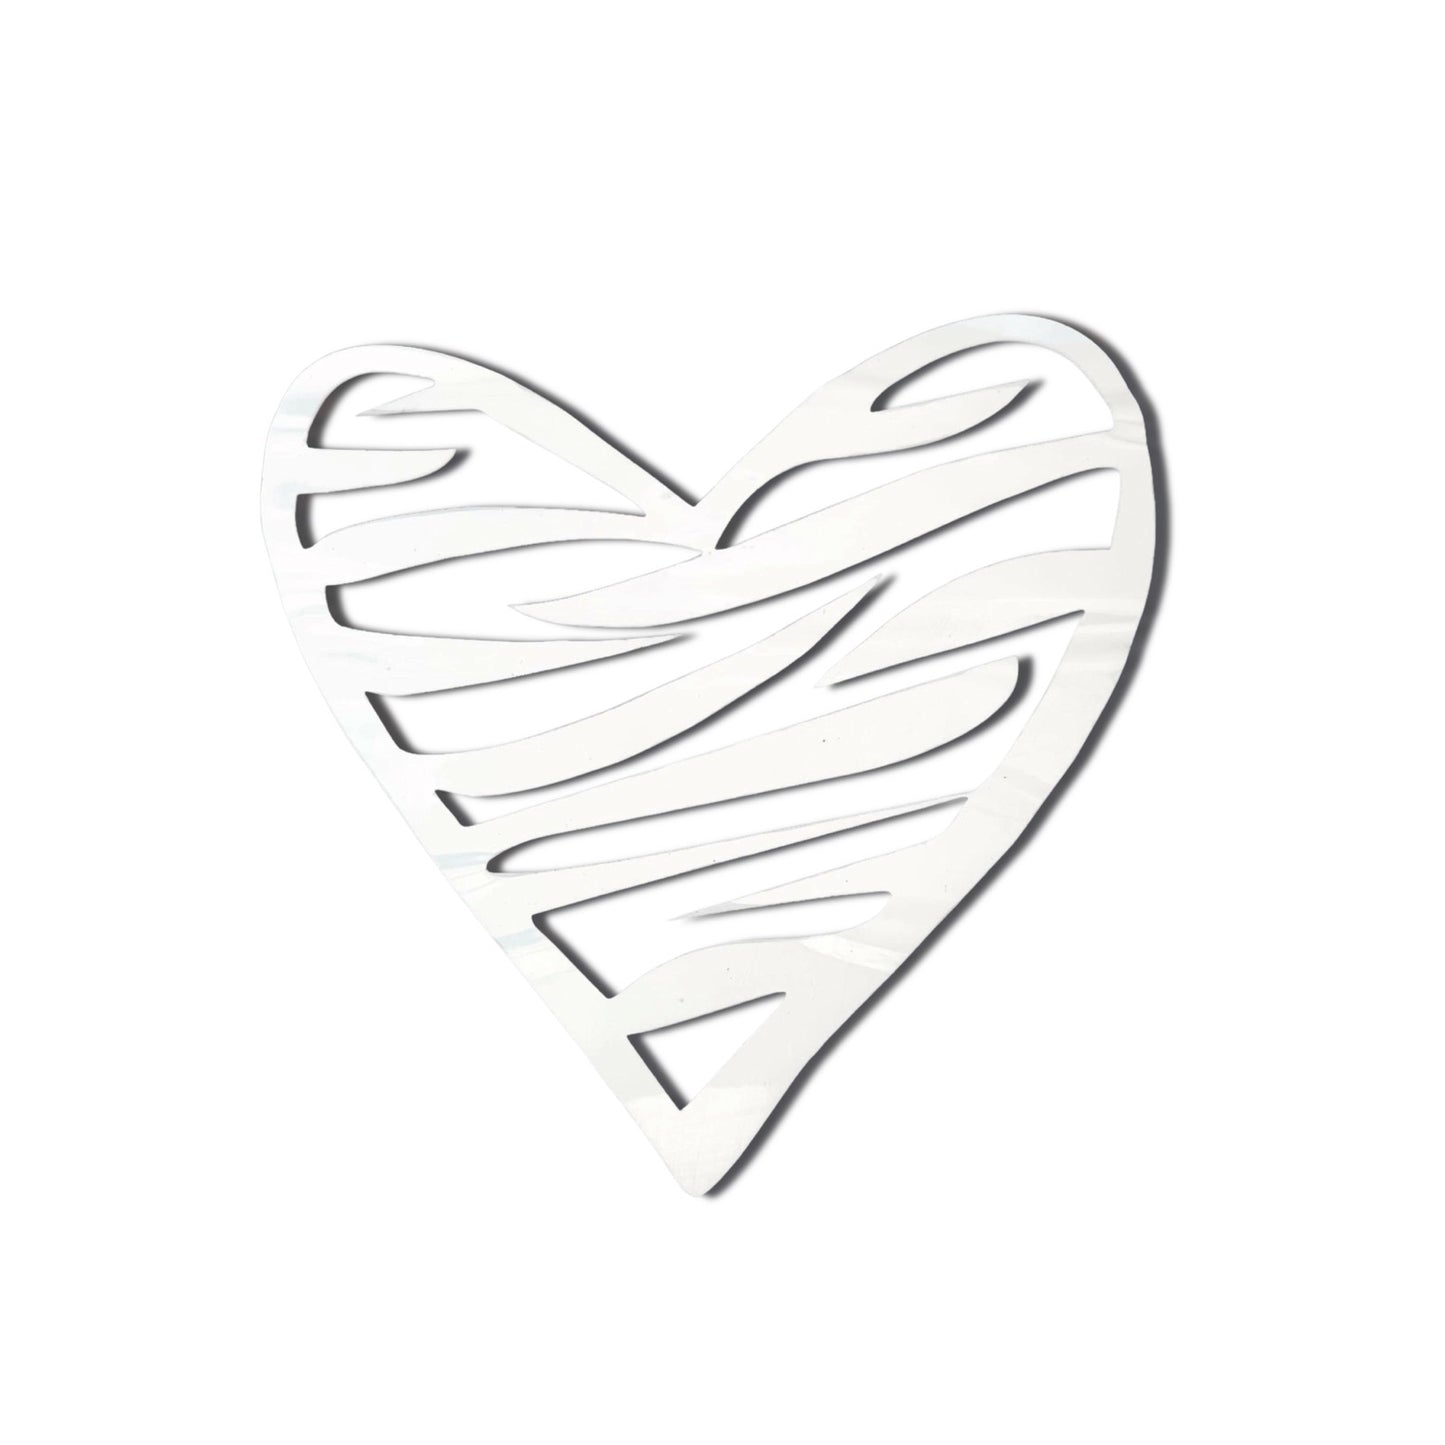 Sticker — Zebra Stripe Heart  SPIRIT SPARKPLUGS White and Transparent  